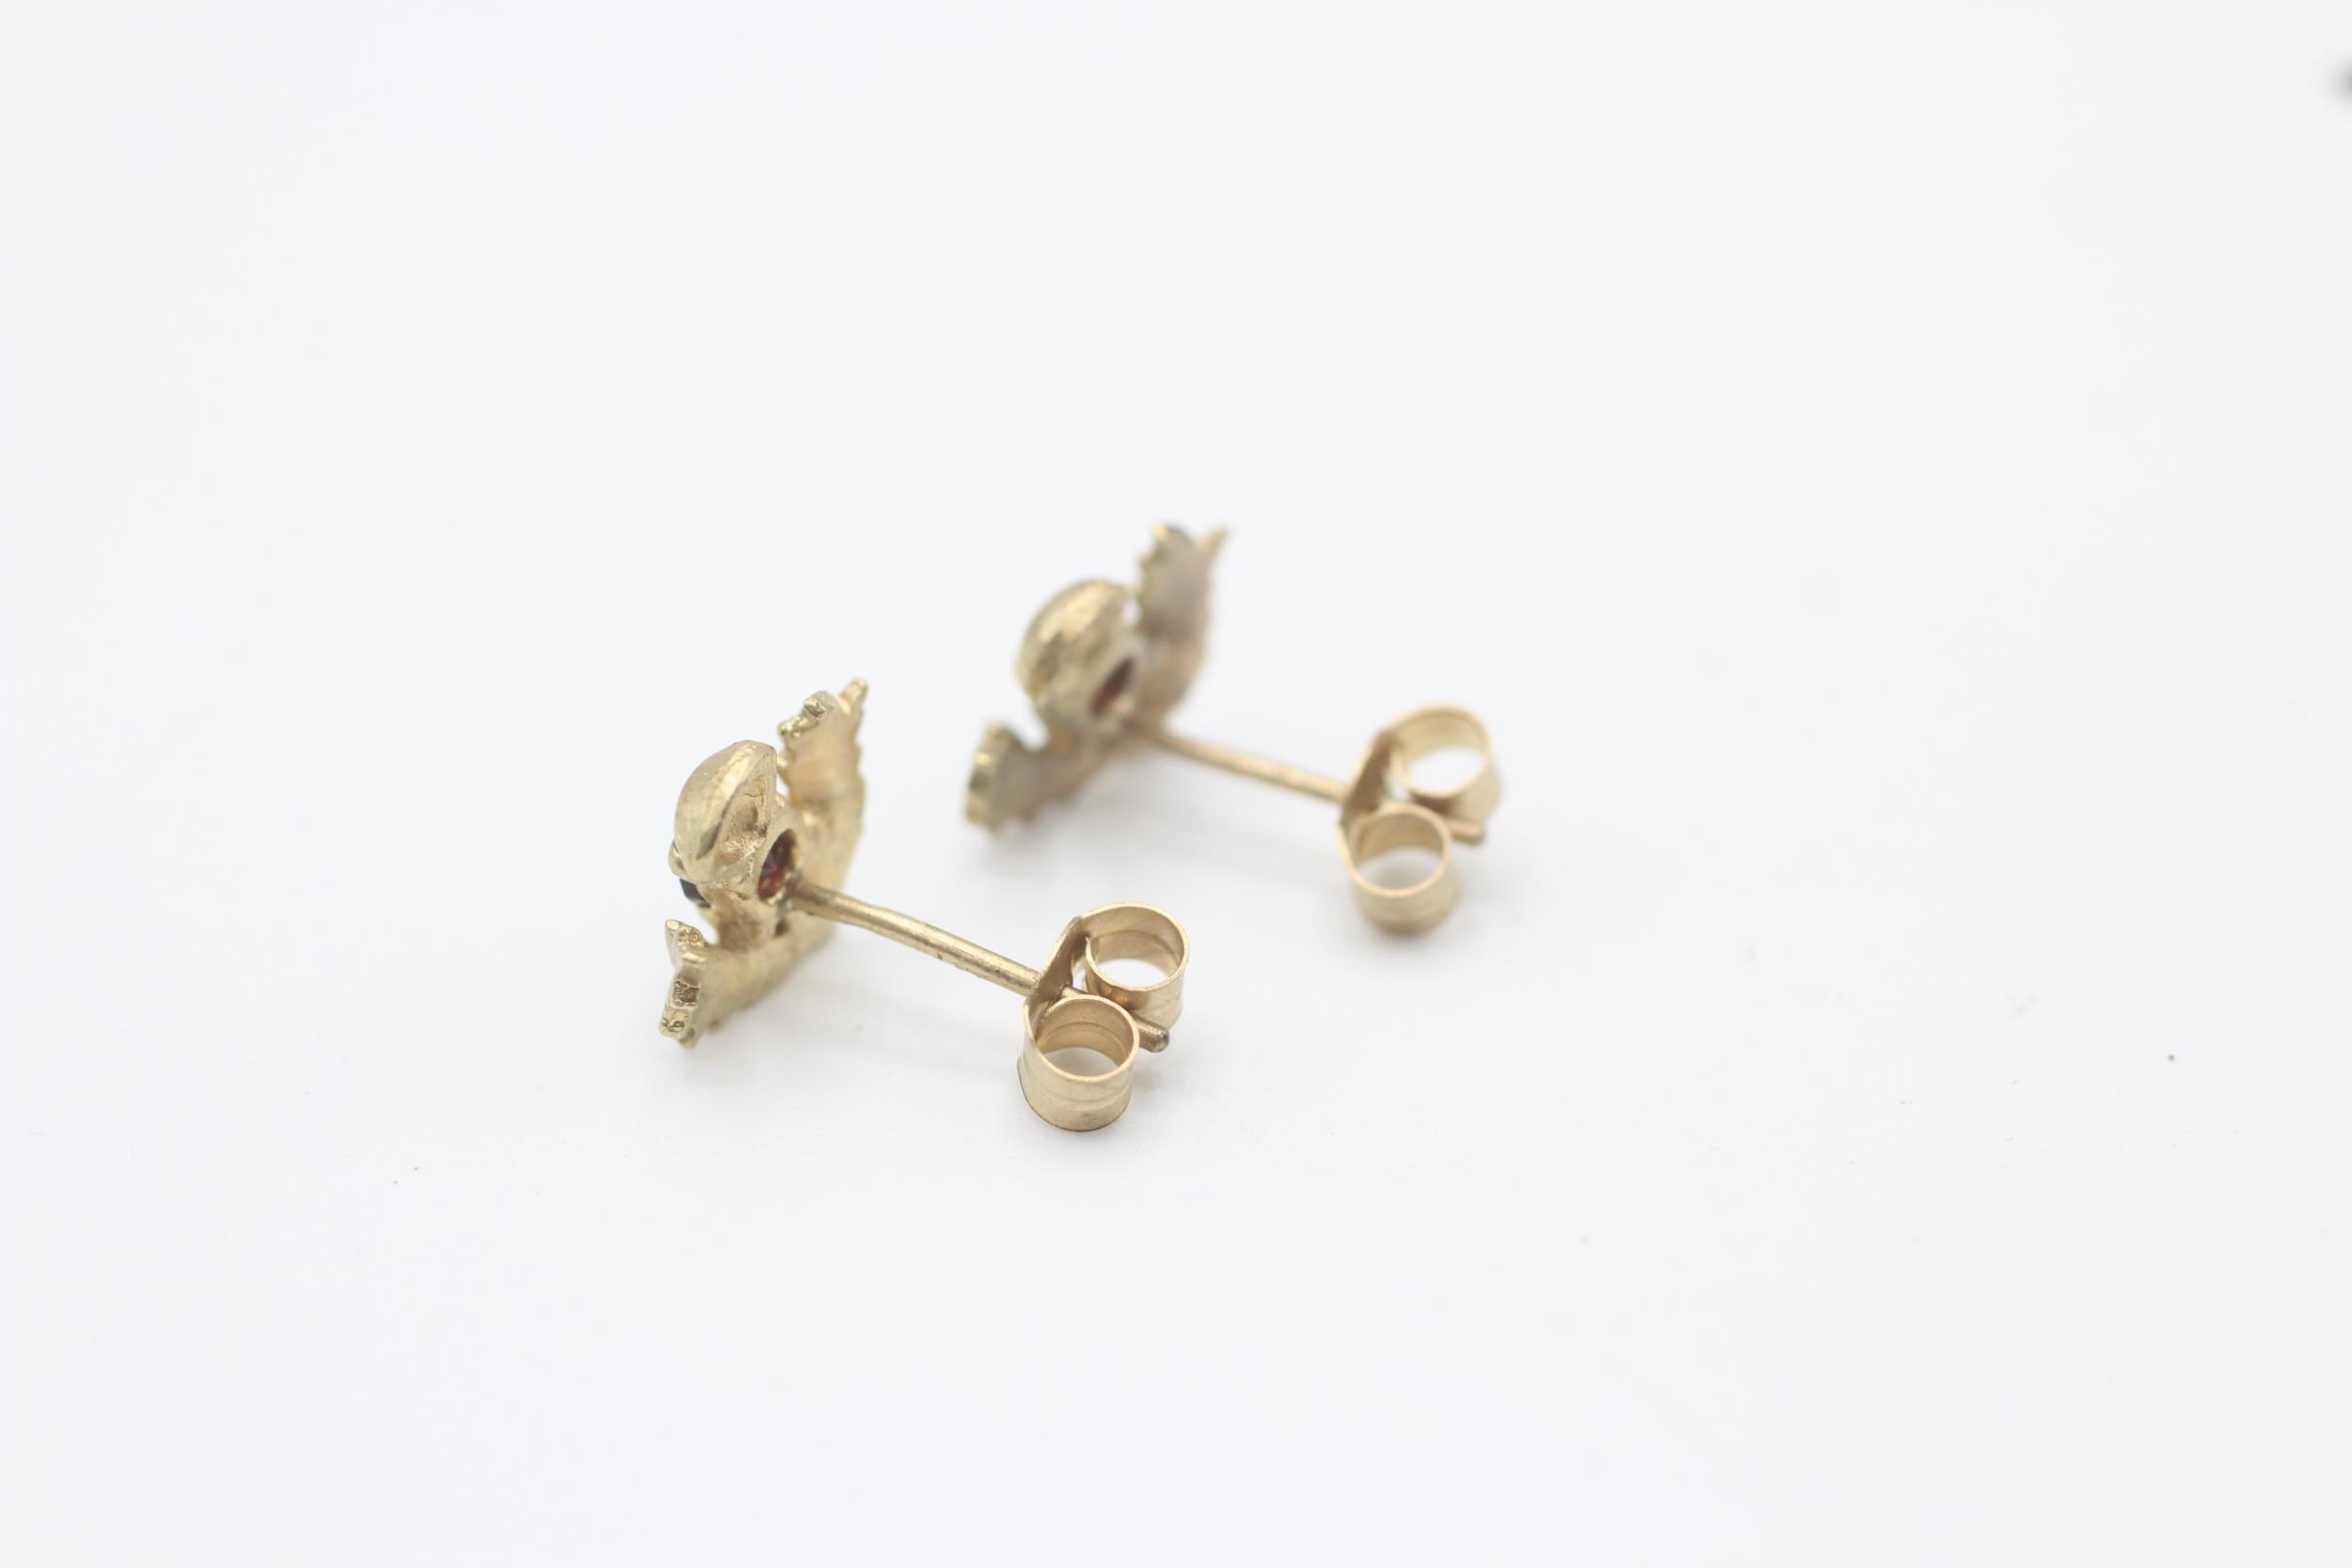 9ct gold garnet stud earrings, with scroll backs - 1.1 g - Image 5 of 5